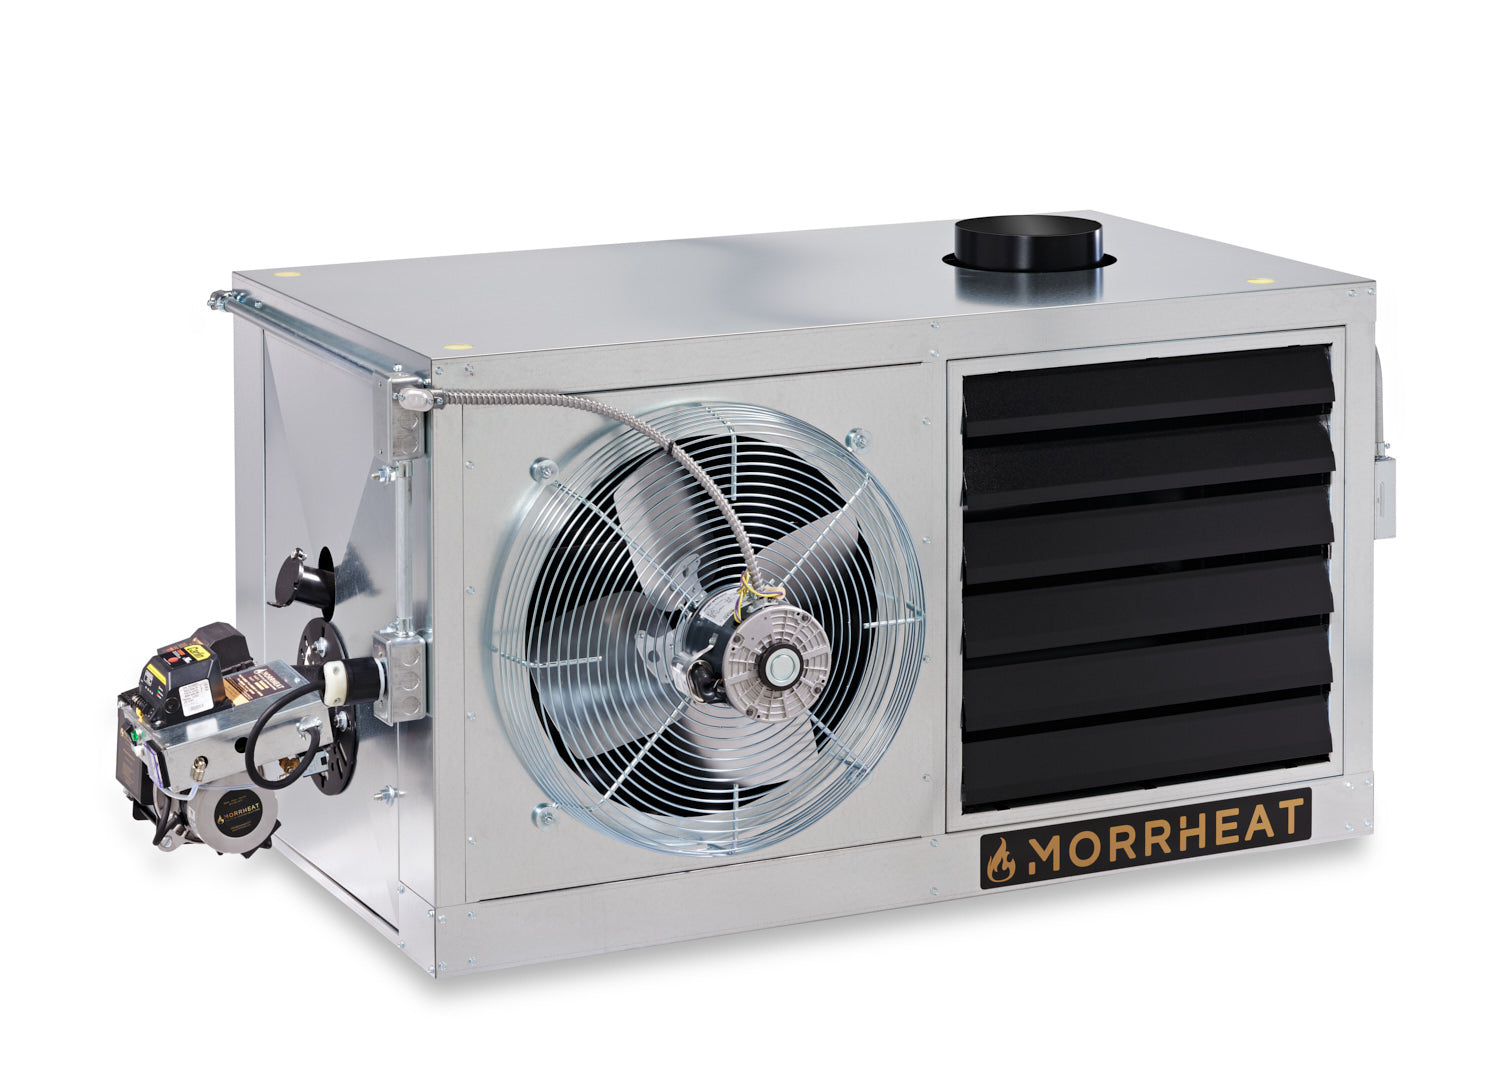 MH-480 Bi-Directional Waste Oil Heater